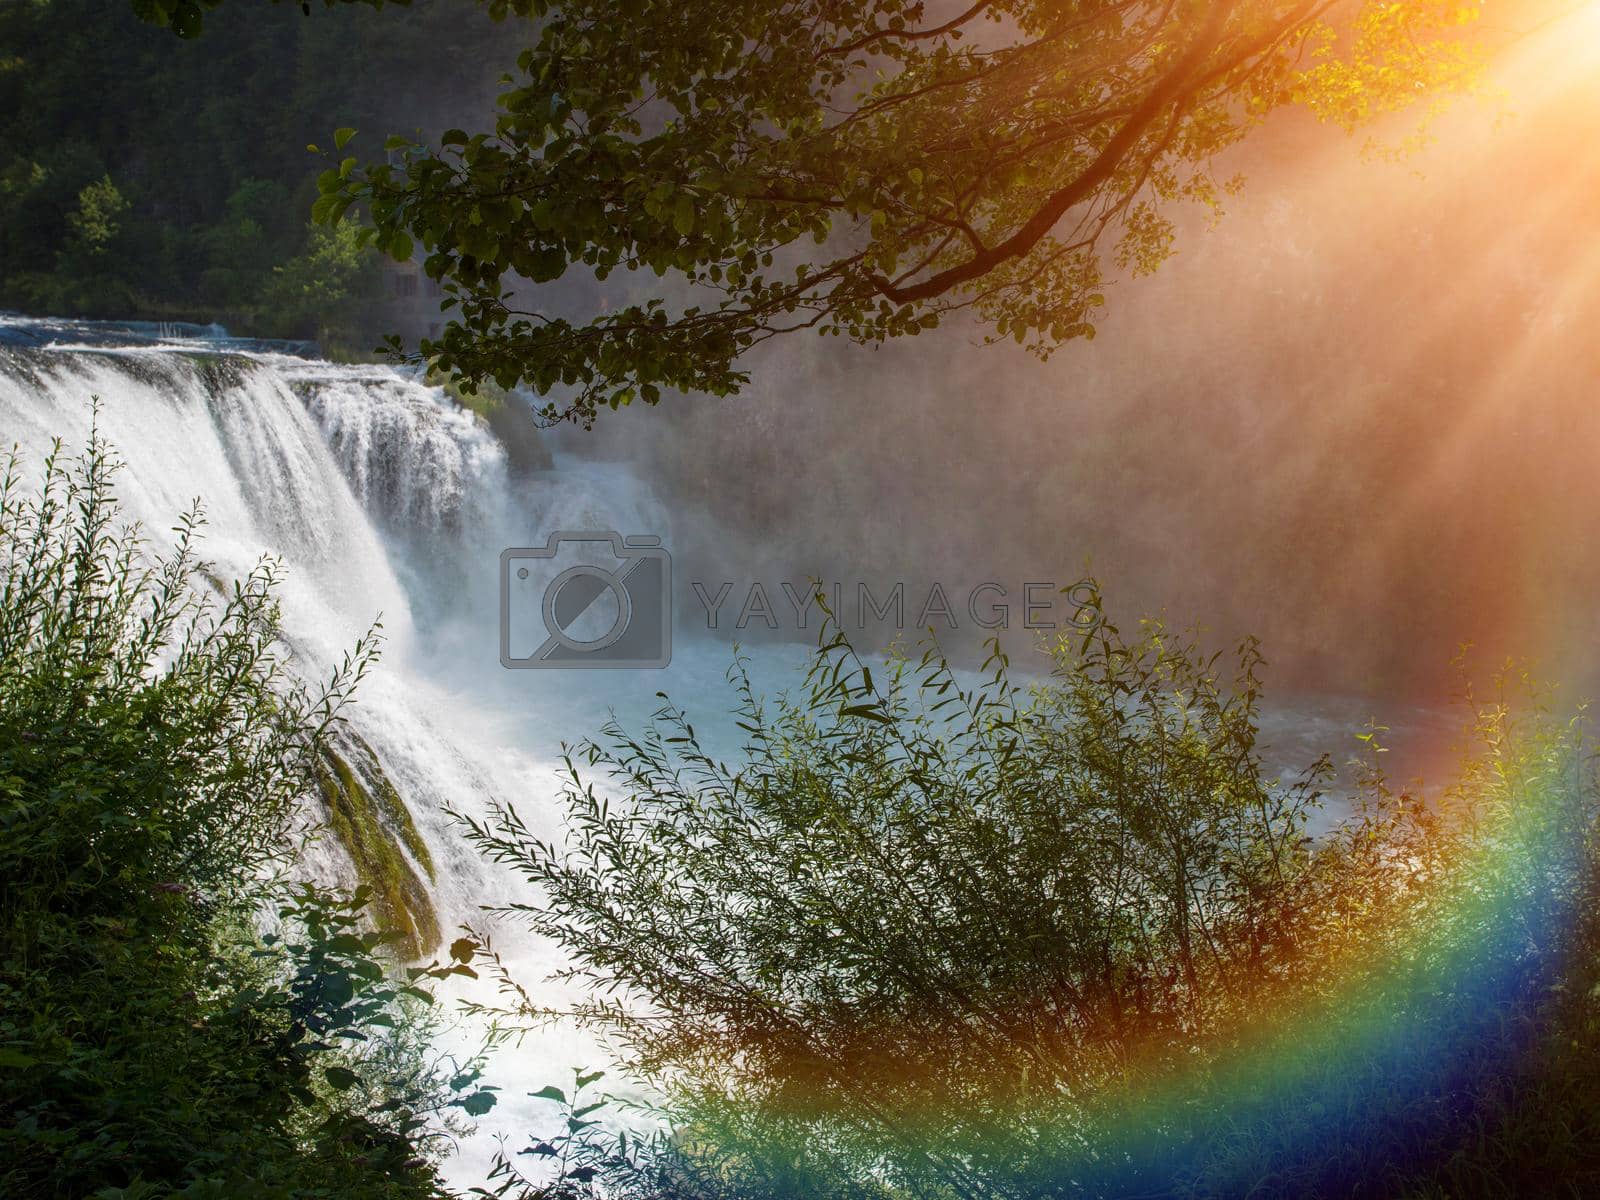 Royalty free image of waterfalls by dotshock